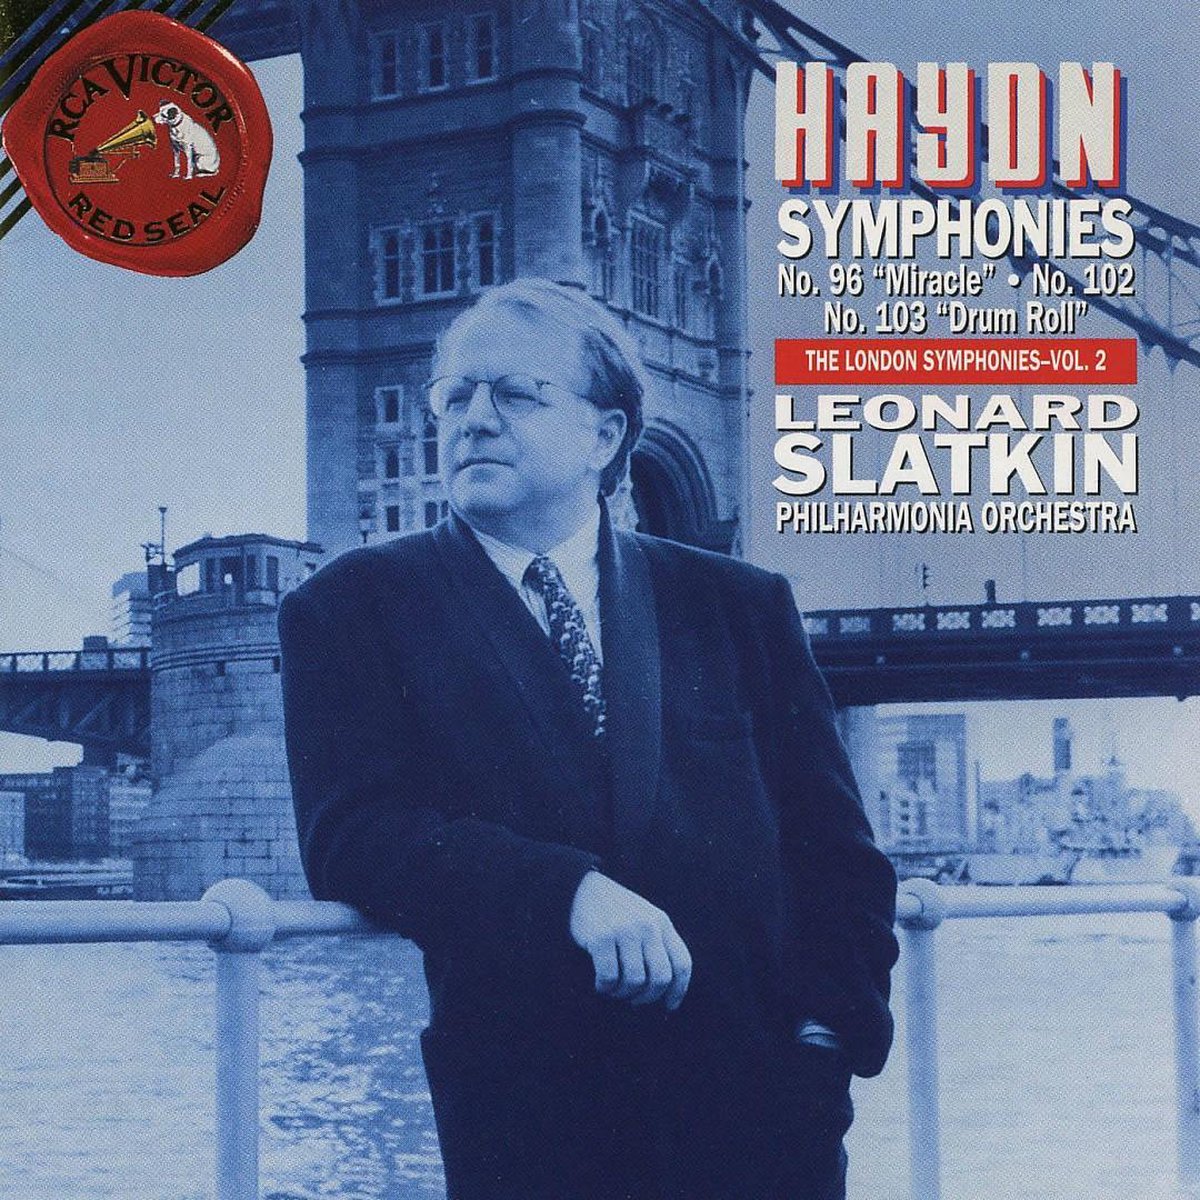 Haydn: The London Symphonies, Vol. 2 - Leonard Slatkin